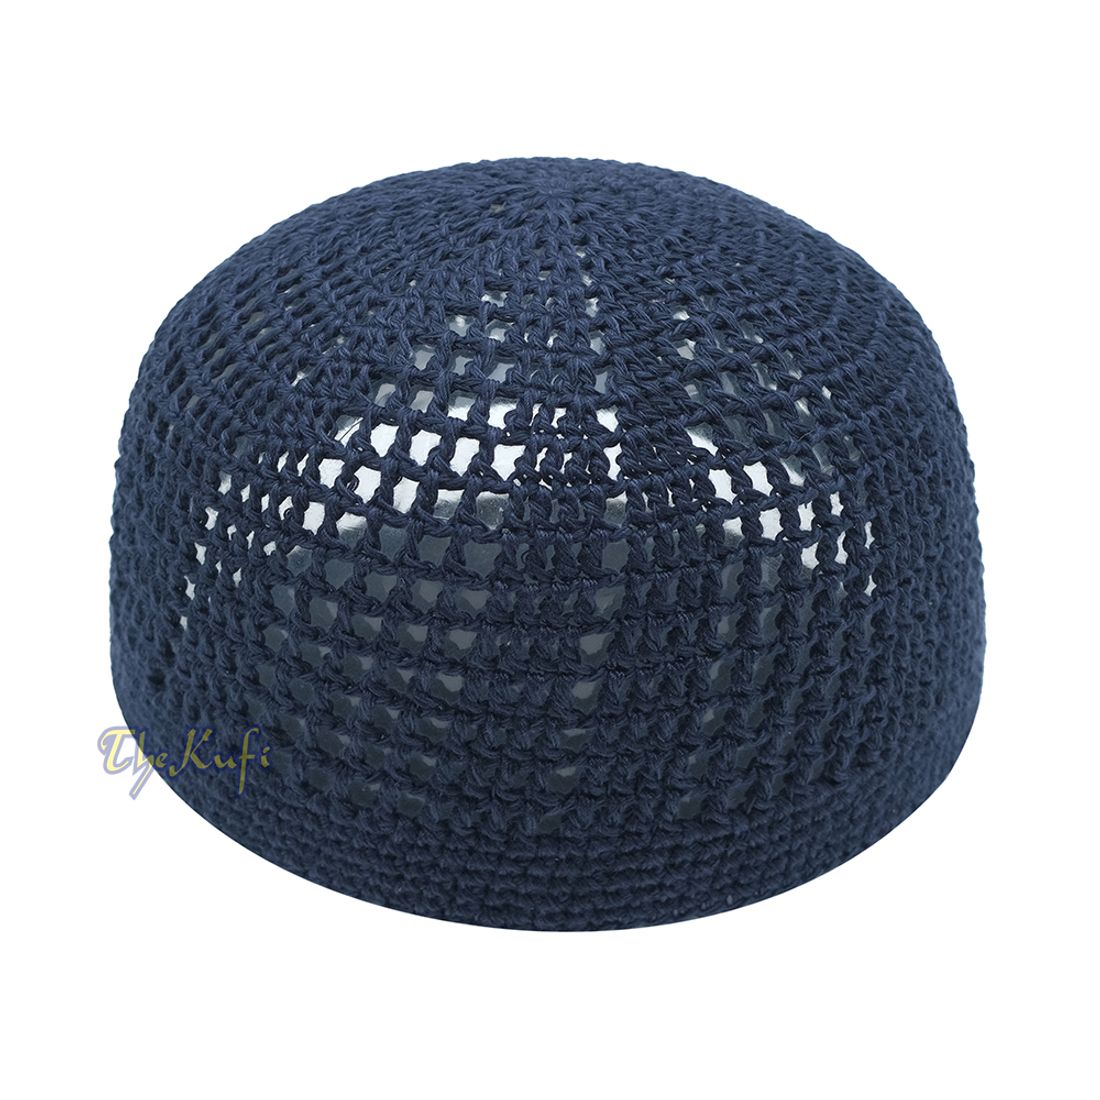 Skull Cap Kufi Cotton Dark Blue Open-weave Design Crochet Knit Head Cover